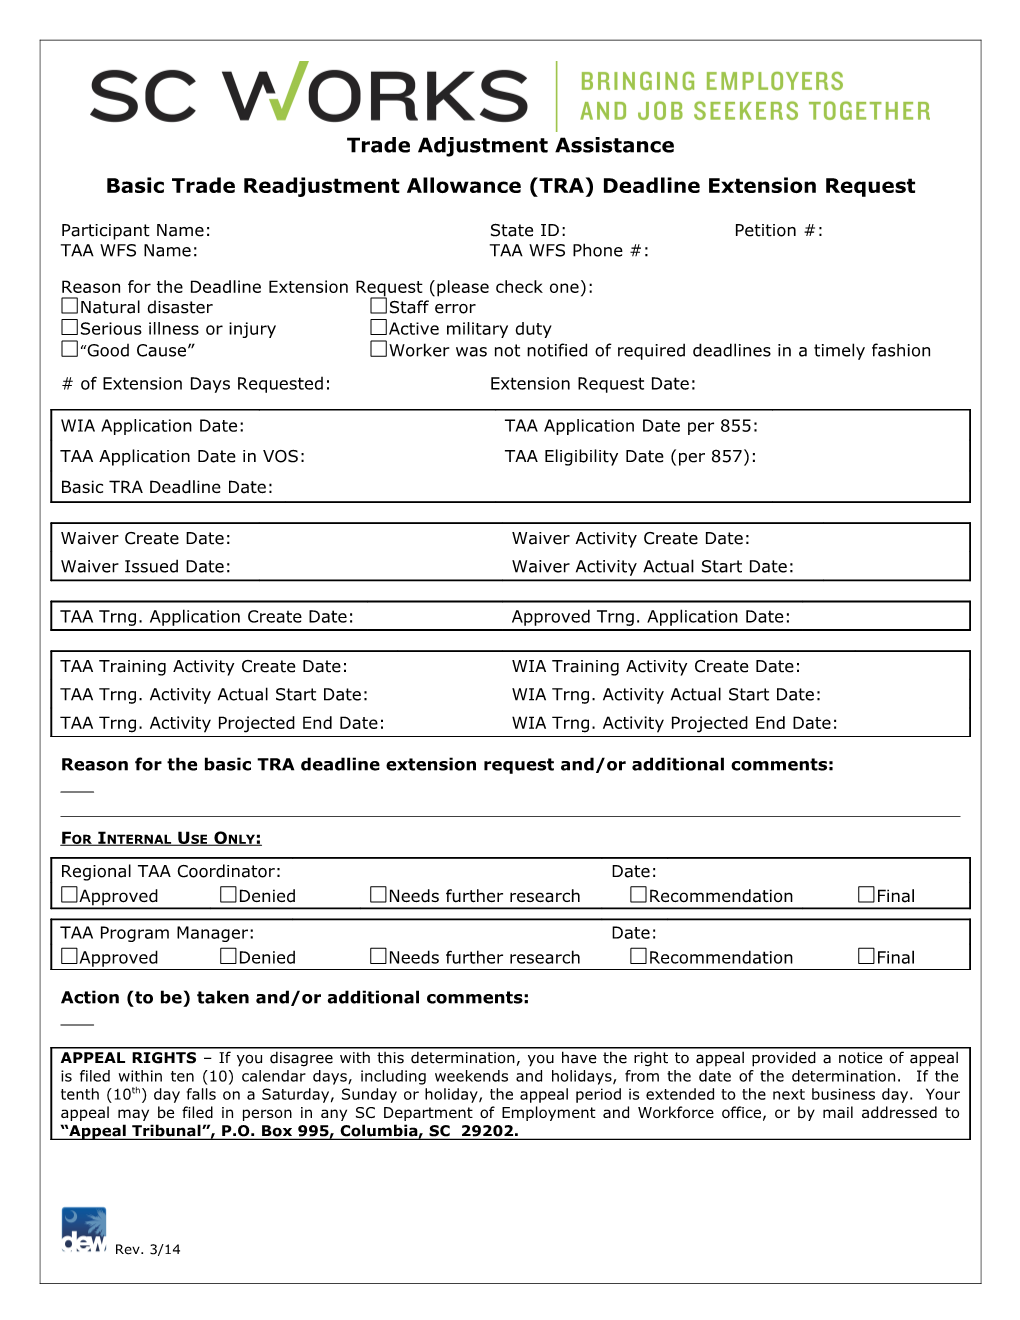 Basic Trade Readjustment Allowance (TRA) Deadline Extension Request